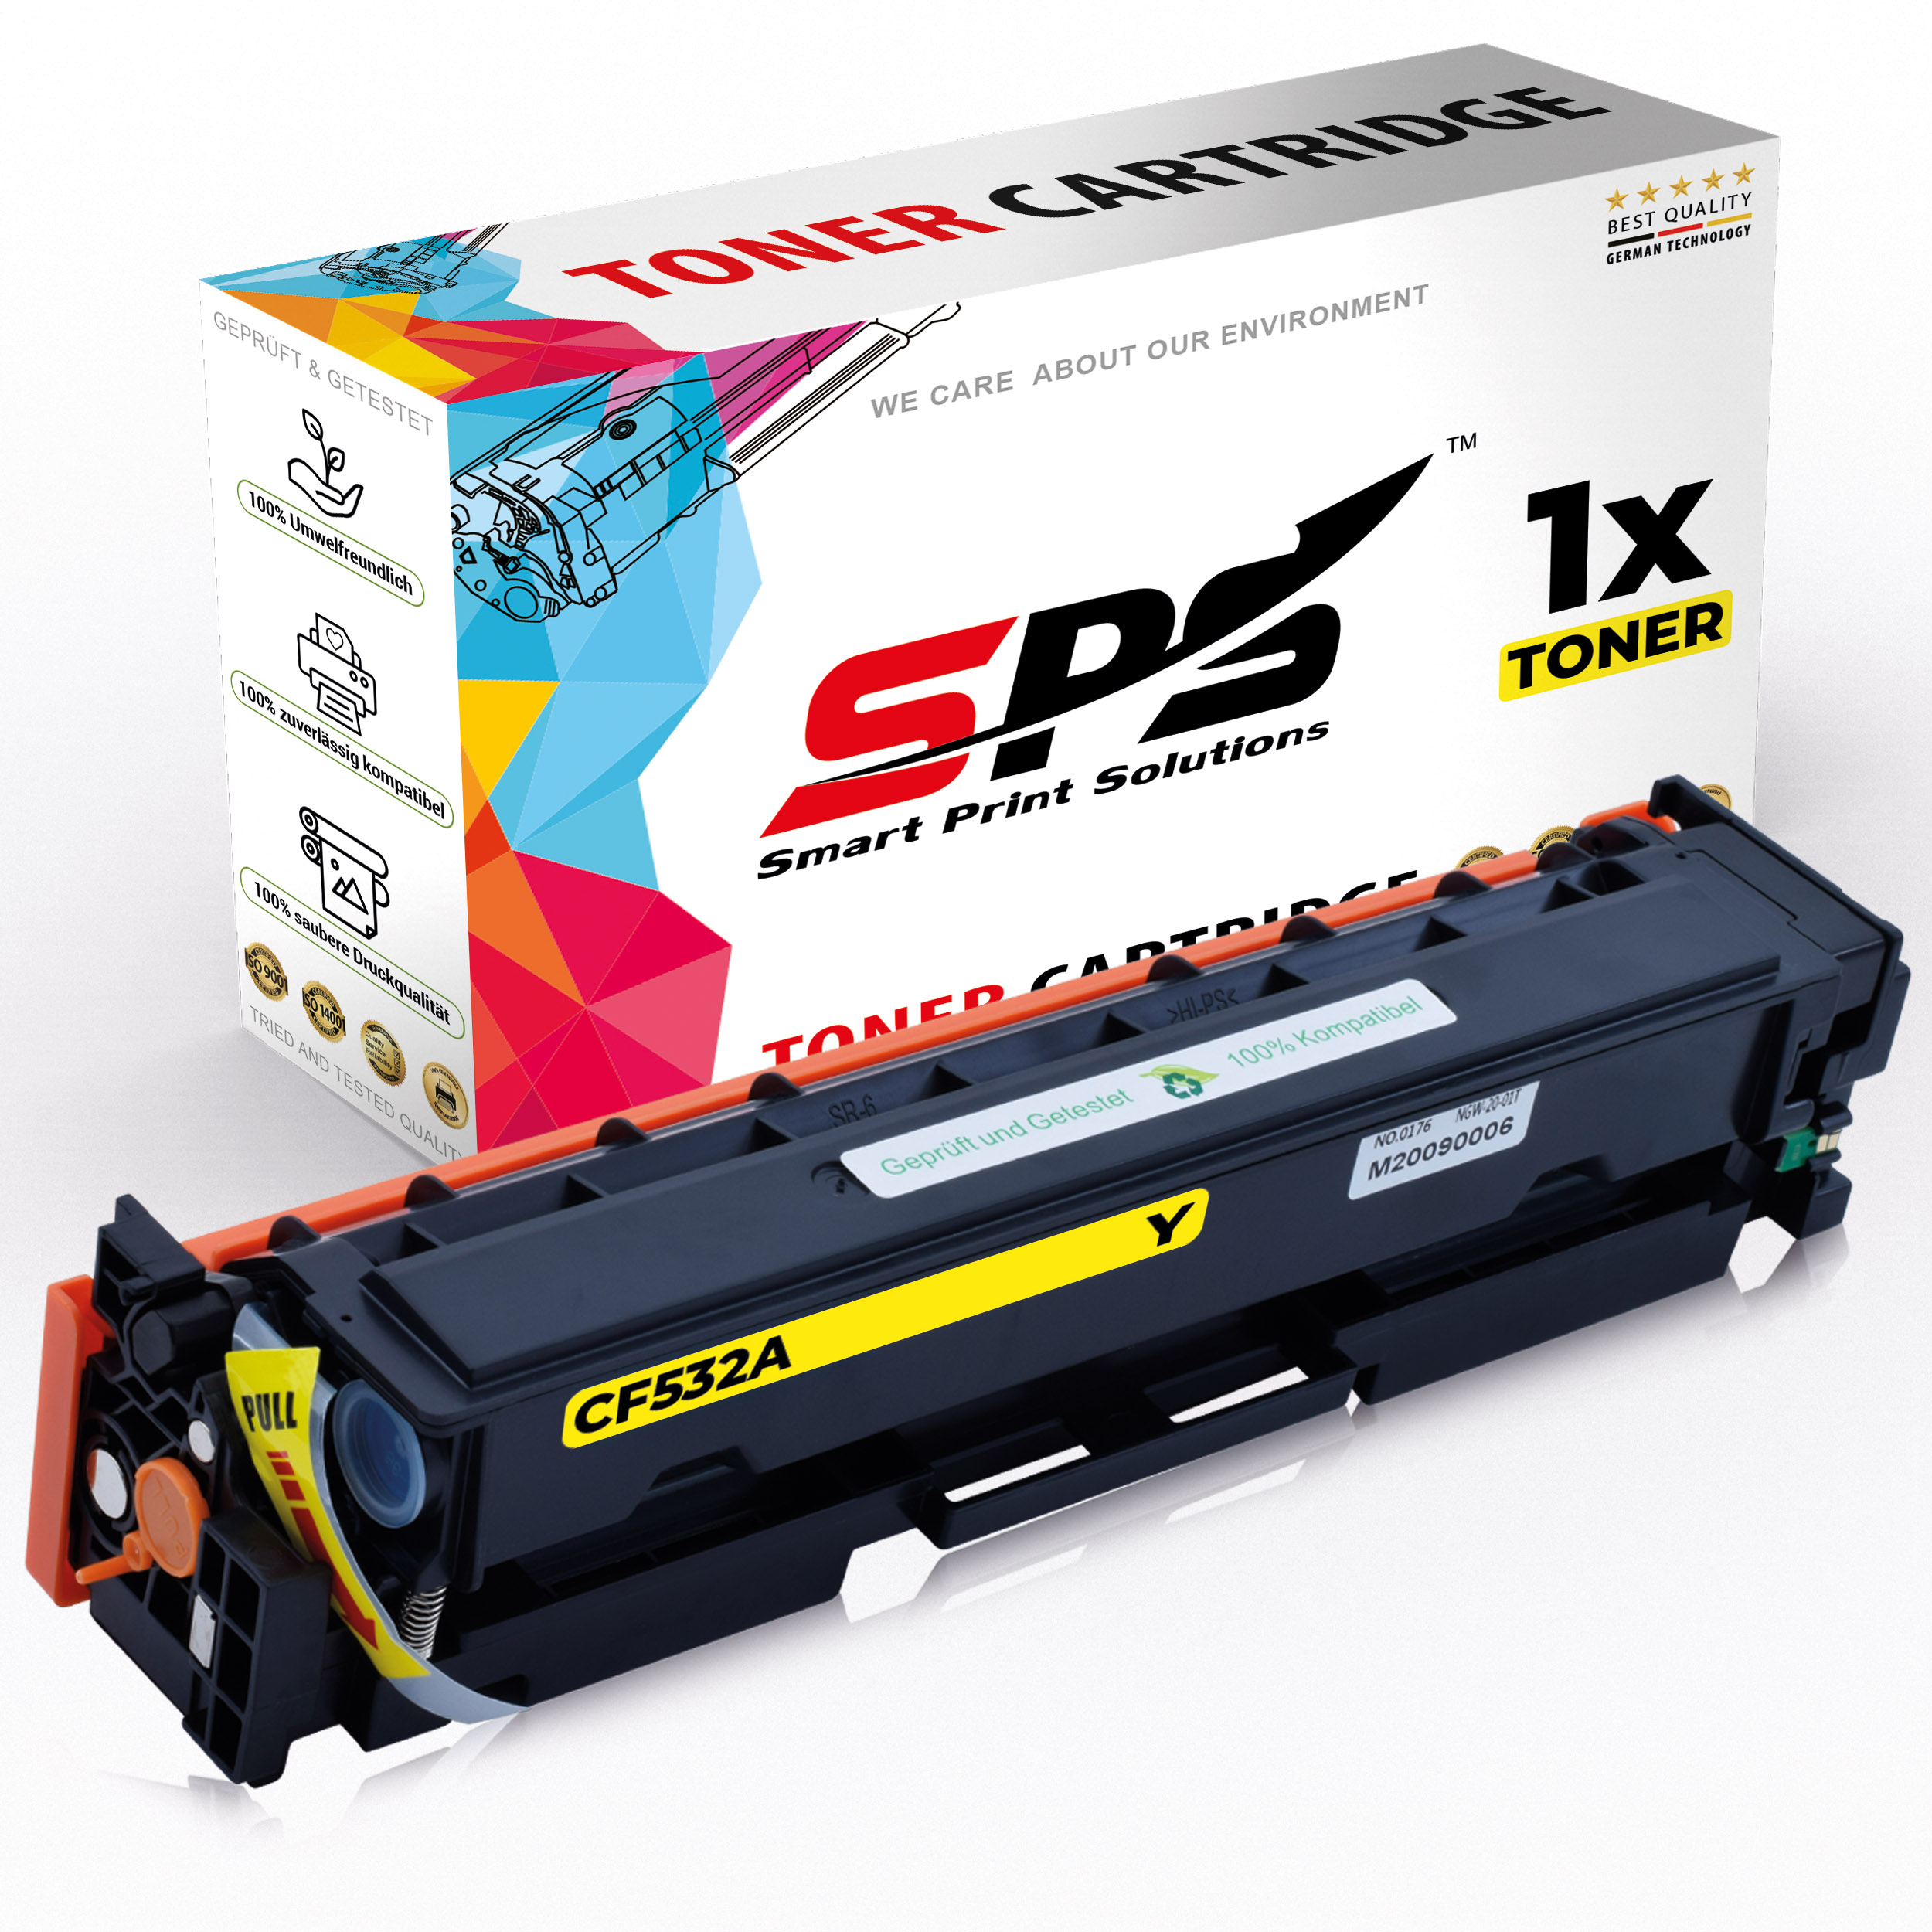 S-16995 / (205A MFP Pro Gelb SPS Toner M181FW) CF532A Color Laserjet